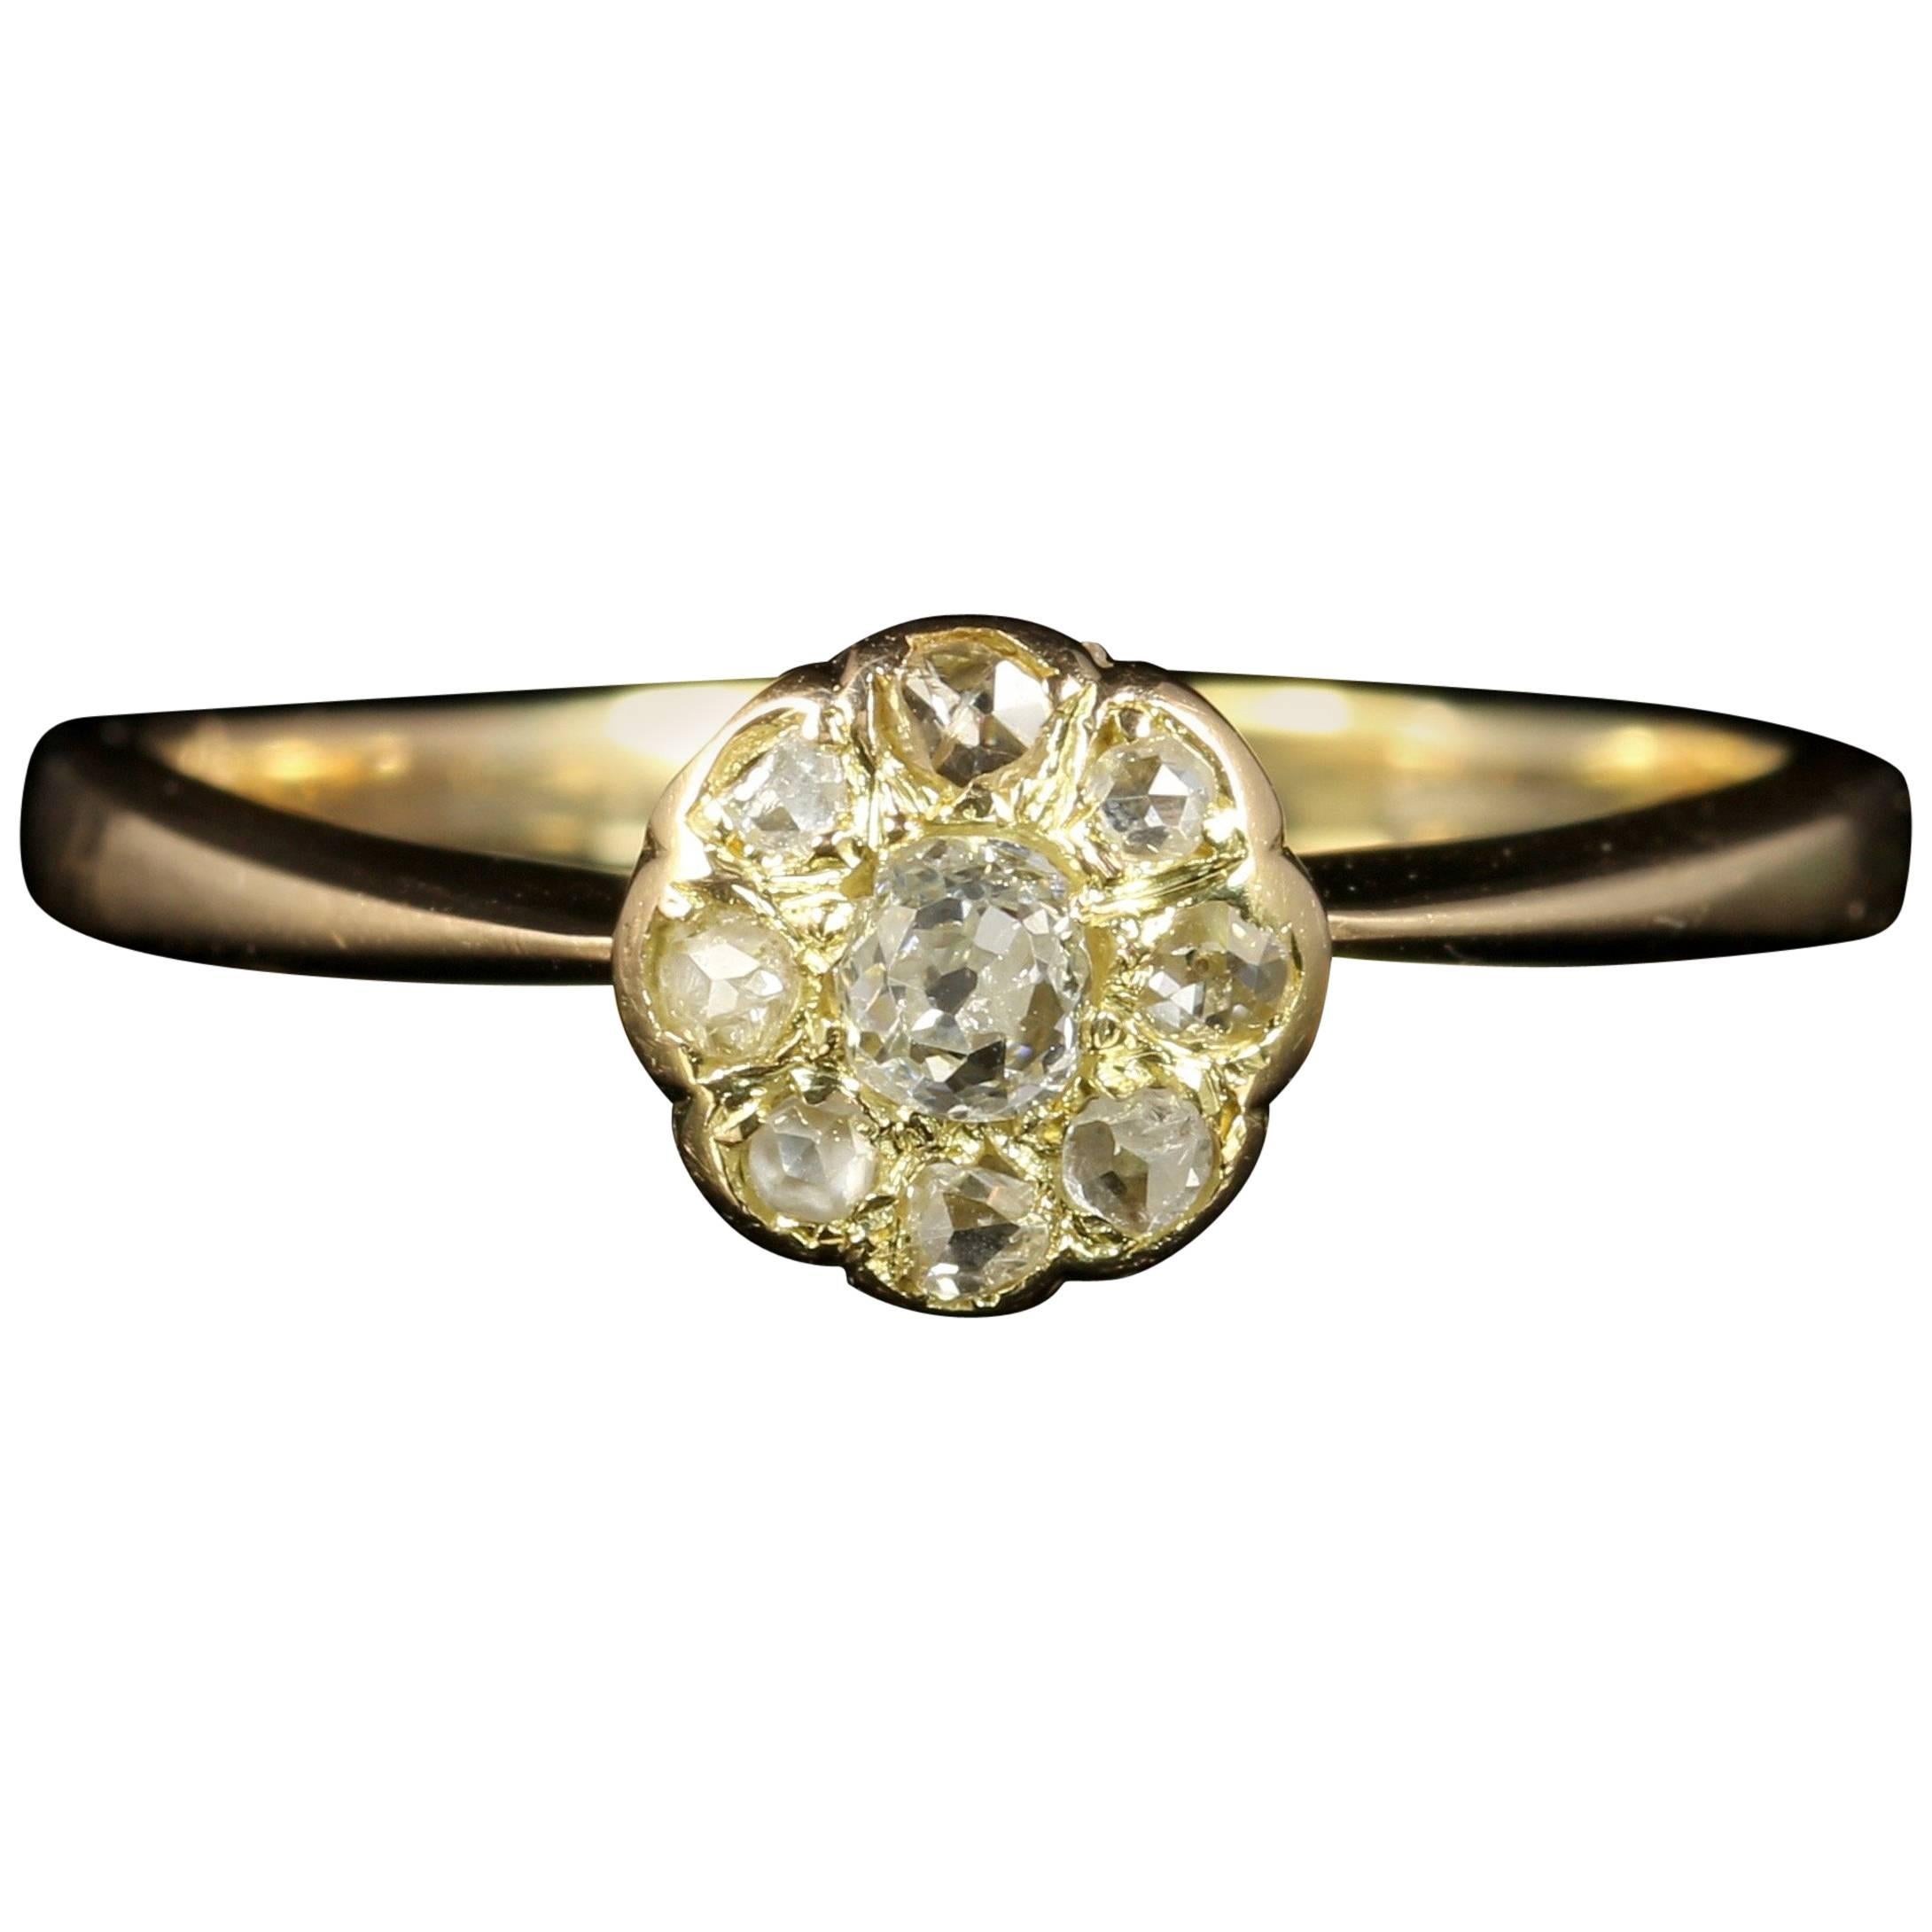 Antique Victorian Diamond Cluster Ring Engagement Ring, circa 1880